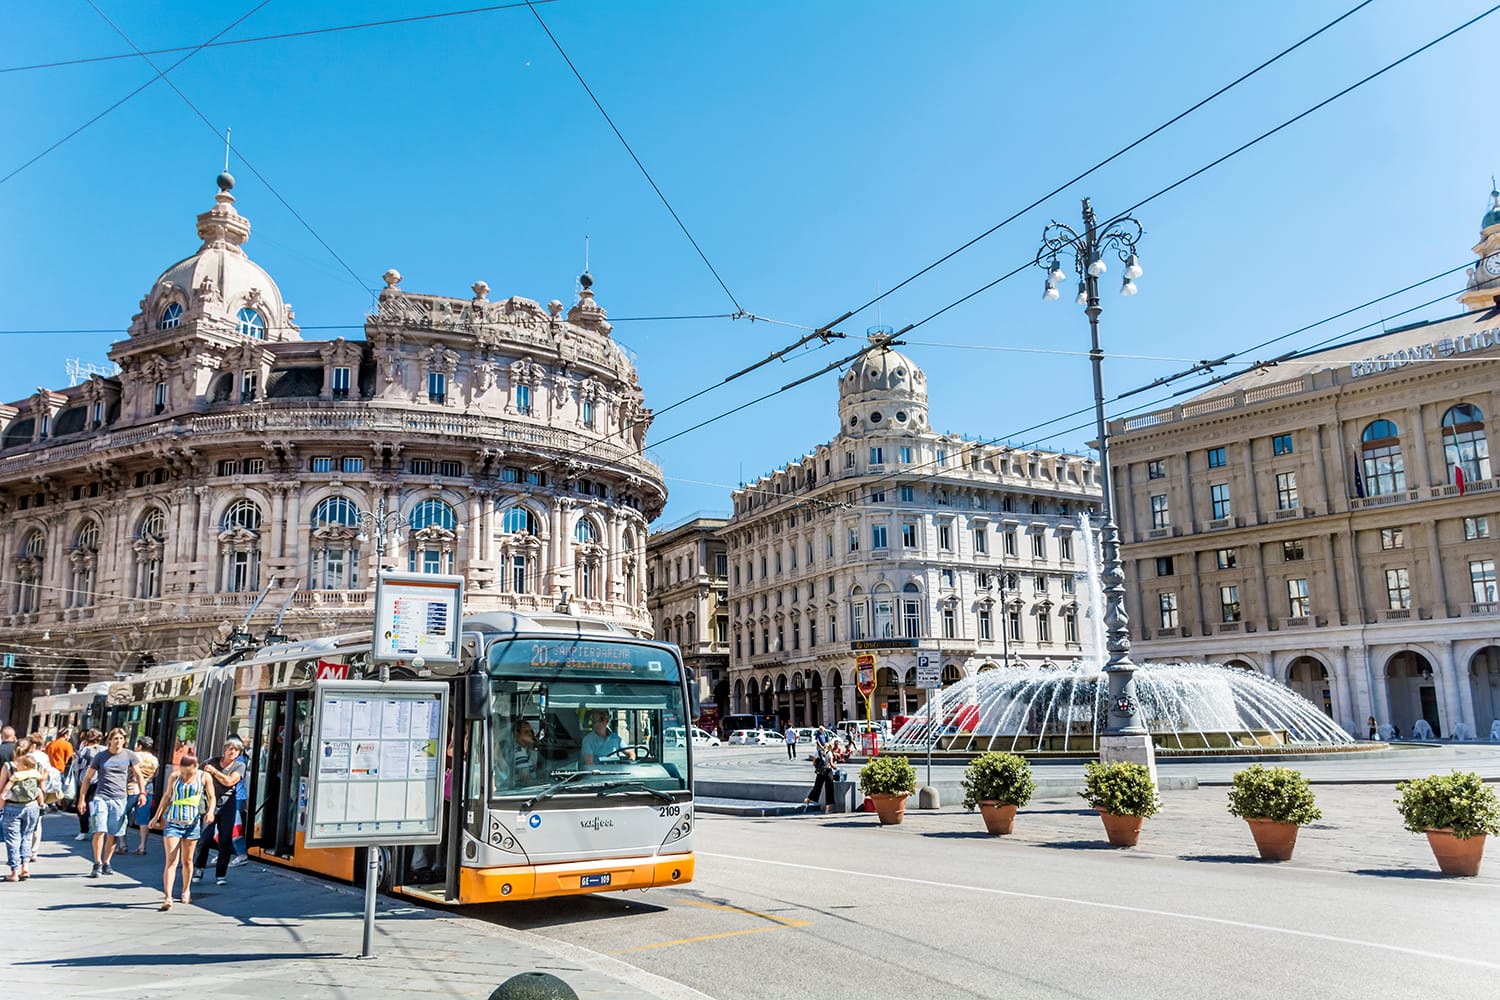 Bus station at Piazza de Ferrari in Genoa, Italy